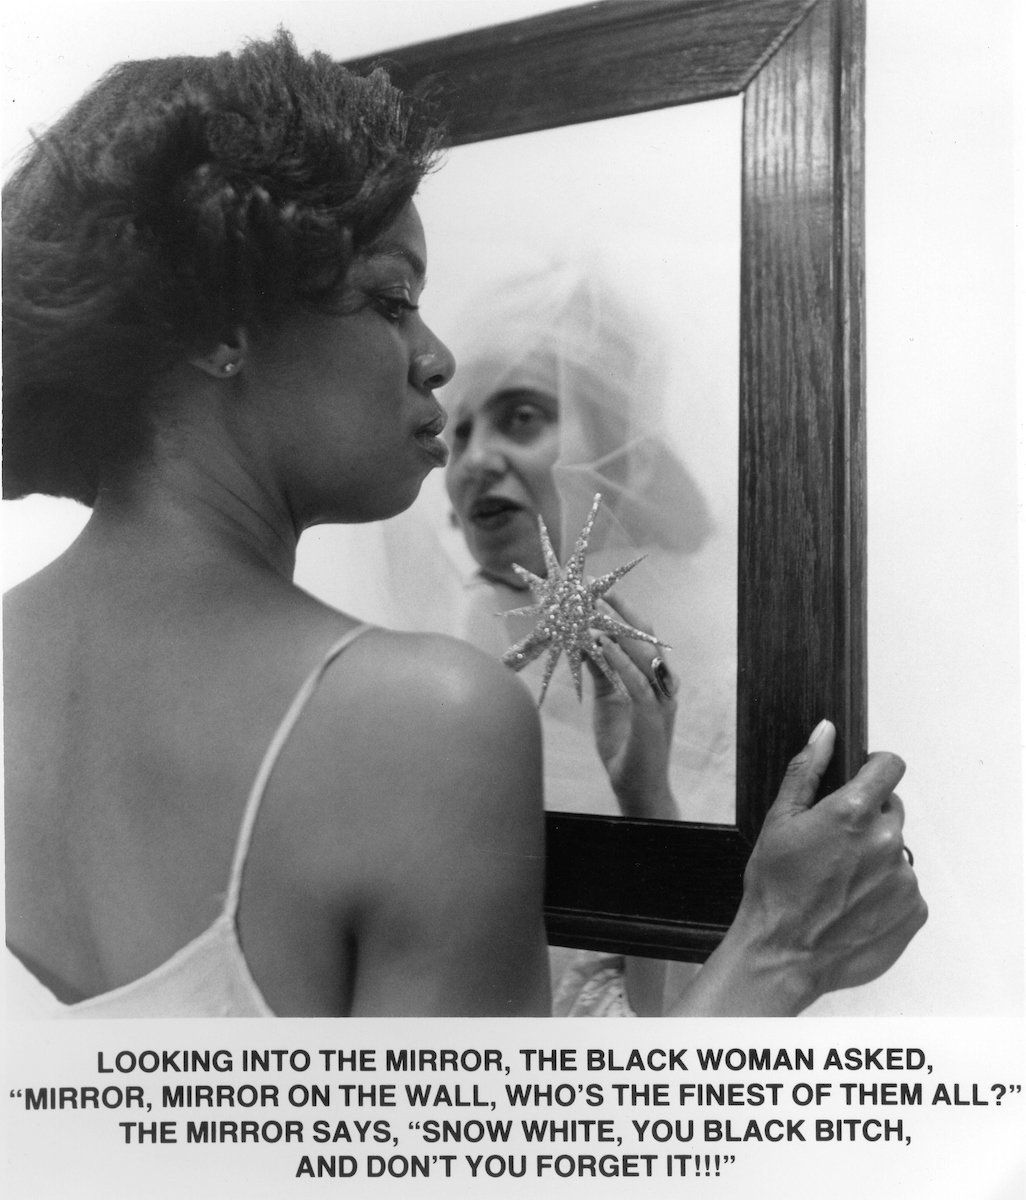 Carrie Mae Weems (American, born 1953), "Mirror Mirror," 1987-88, silver print, 24.75 x 20.75 inches.